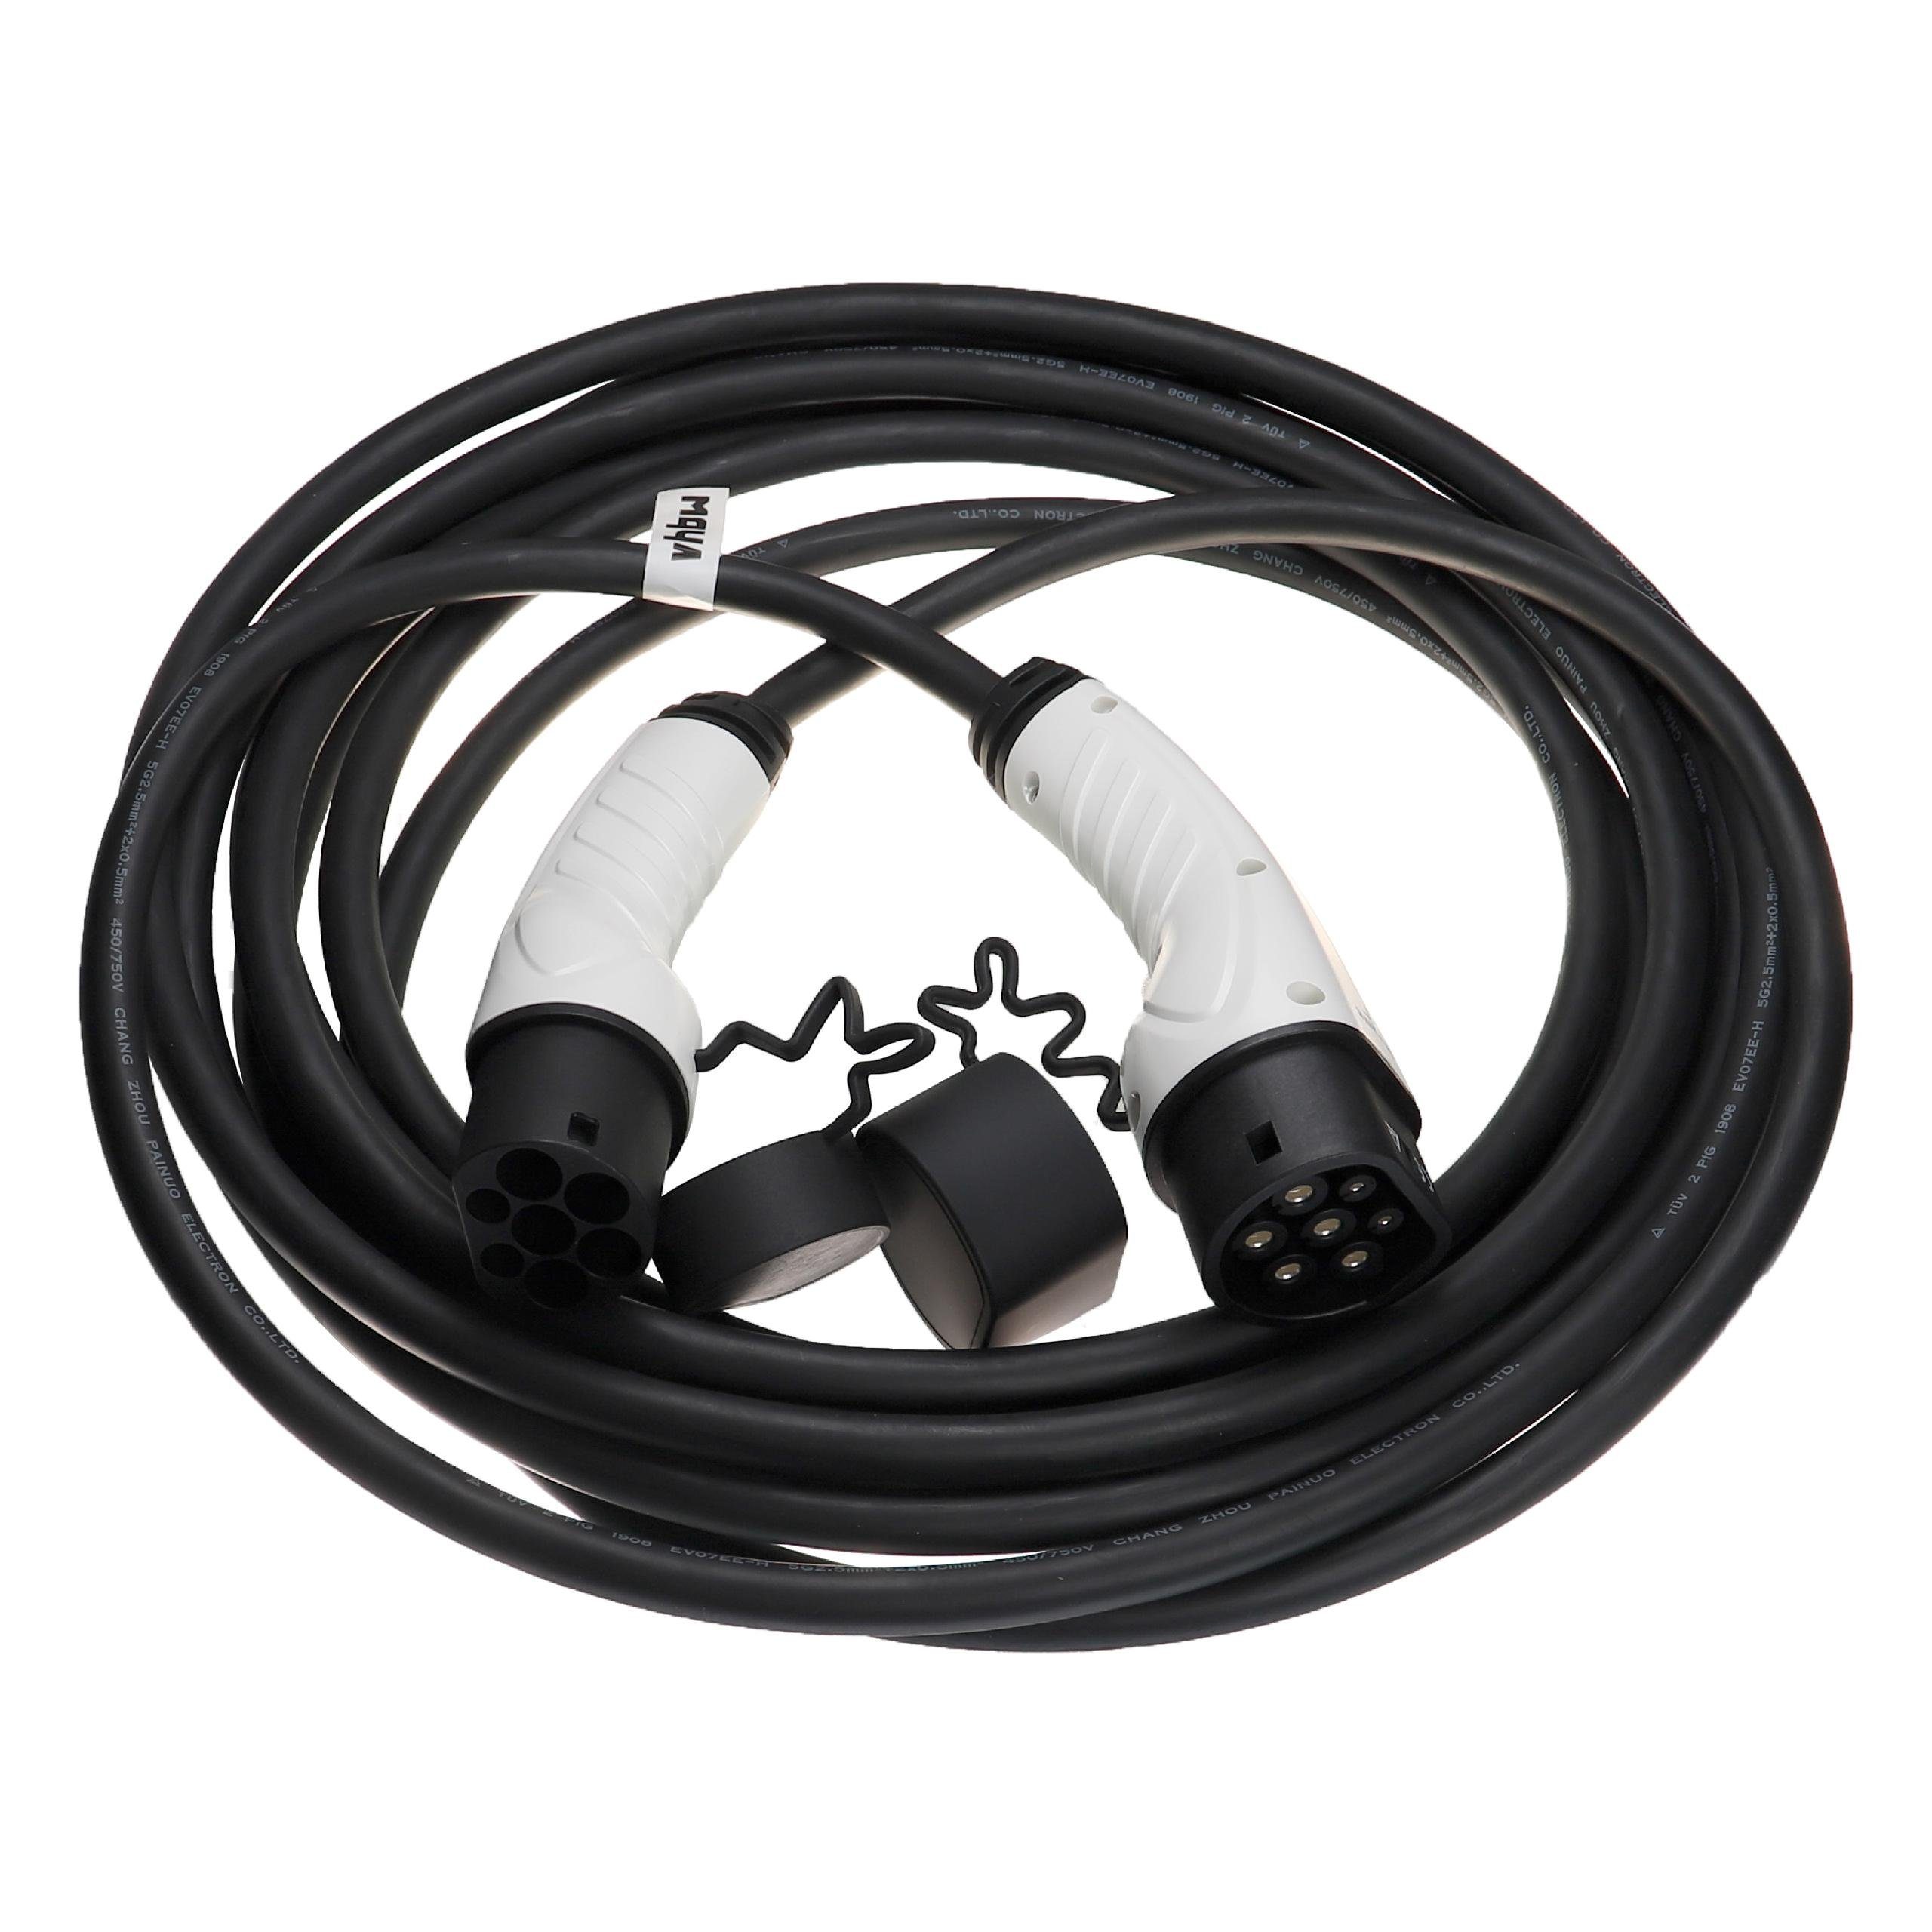 Elektro-Kabel Plug vhbw Countryman für passend Elektroauto Hybrid In Electric, MINI /